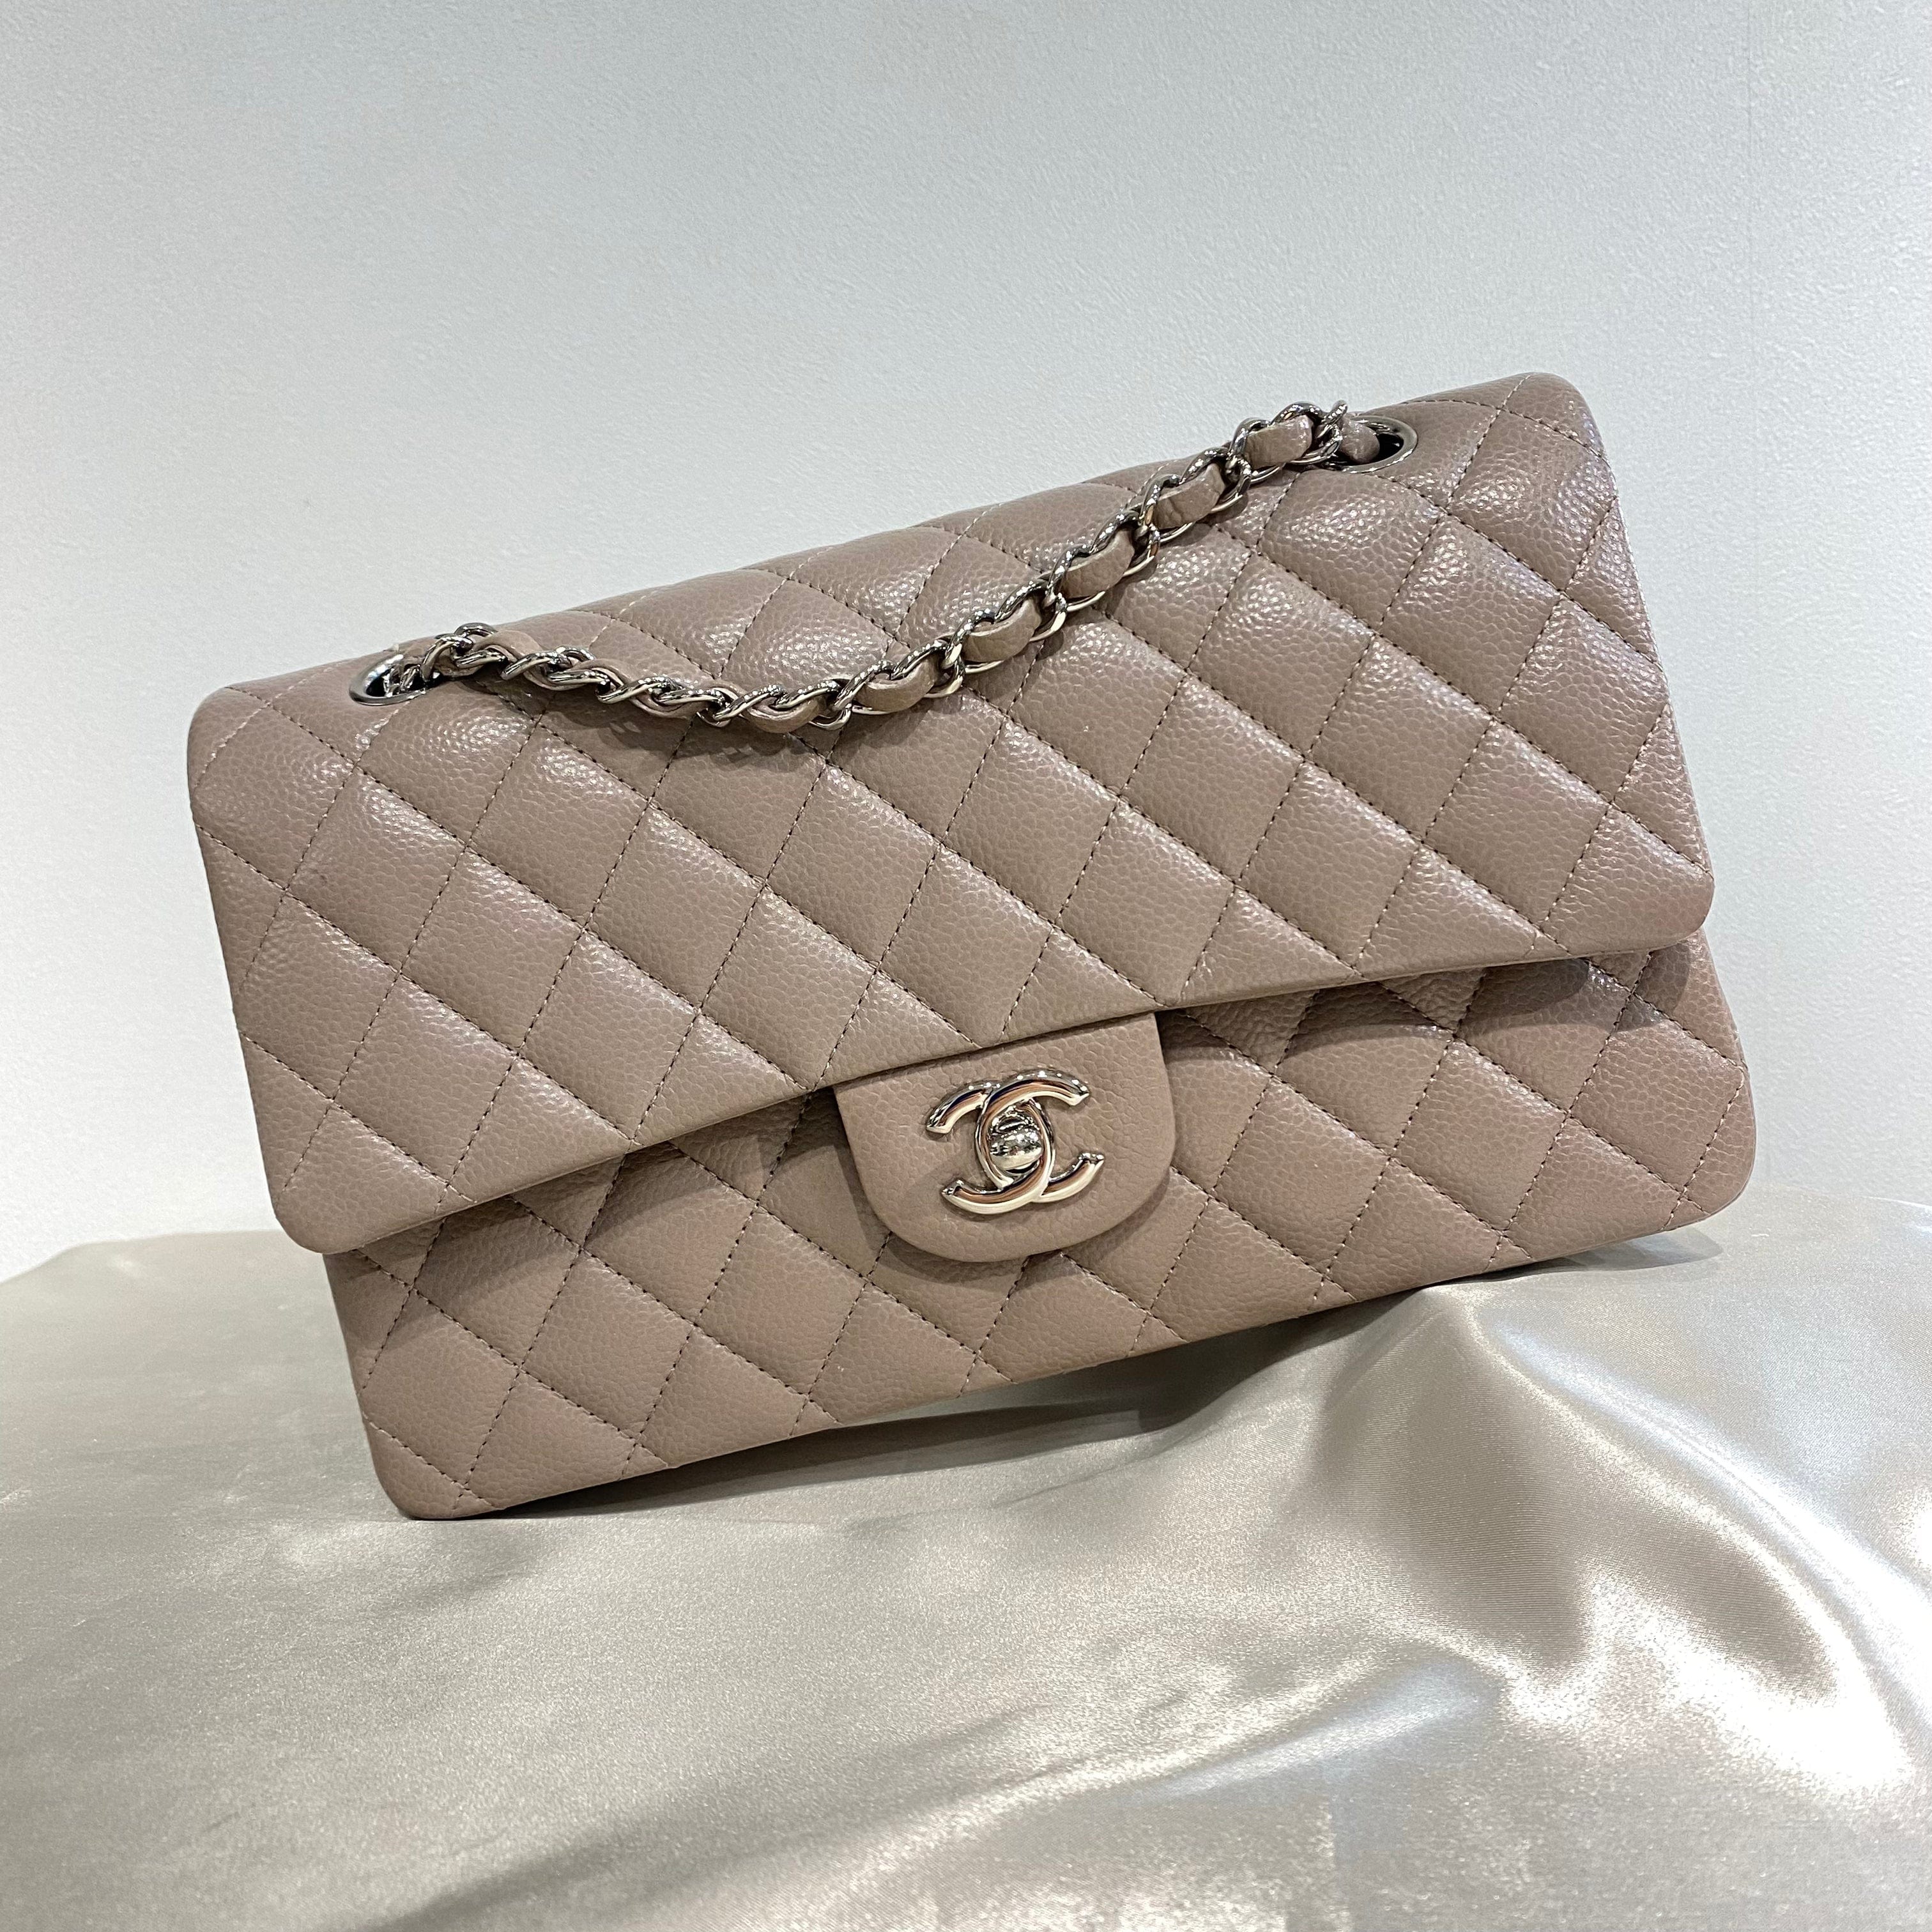 Chanel CHANEL CLASSIC FLAP MEDIUM CHAIN SHOULDER BAG ETOUPE CAVIAR SKIN SHW 90213955